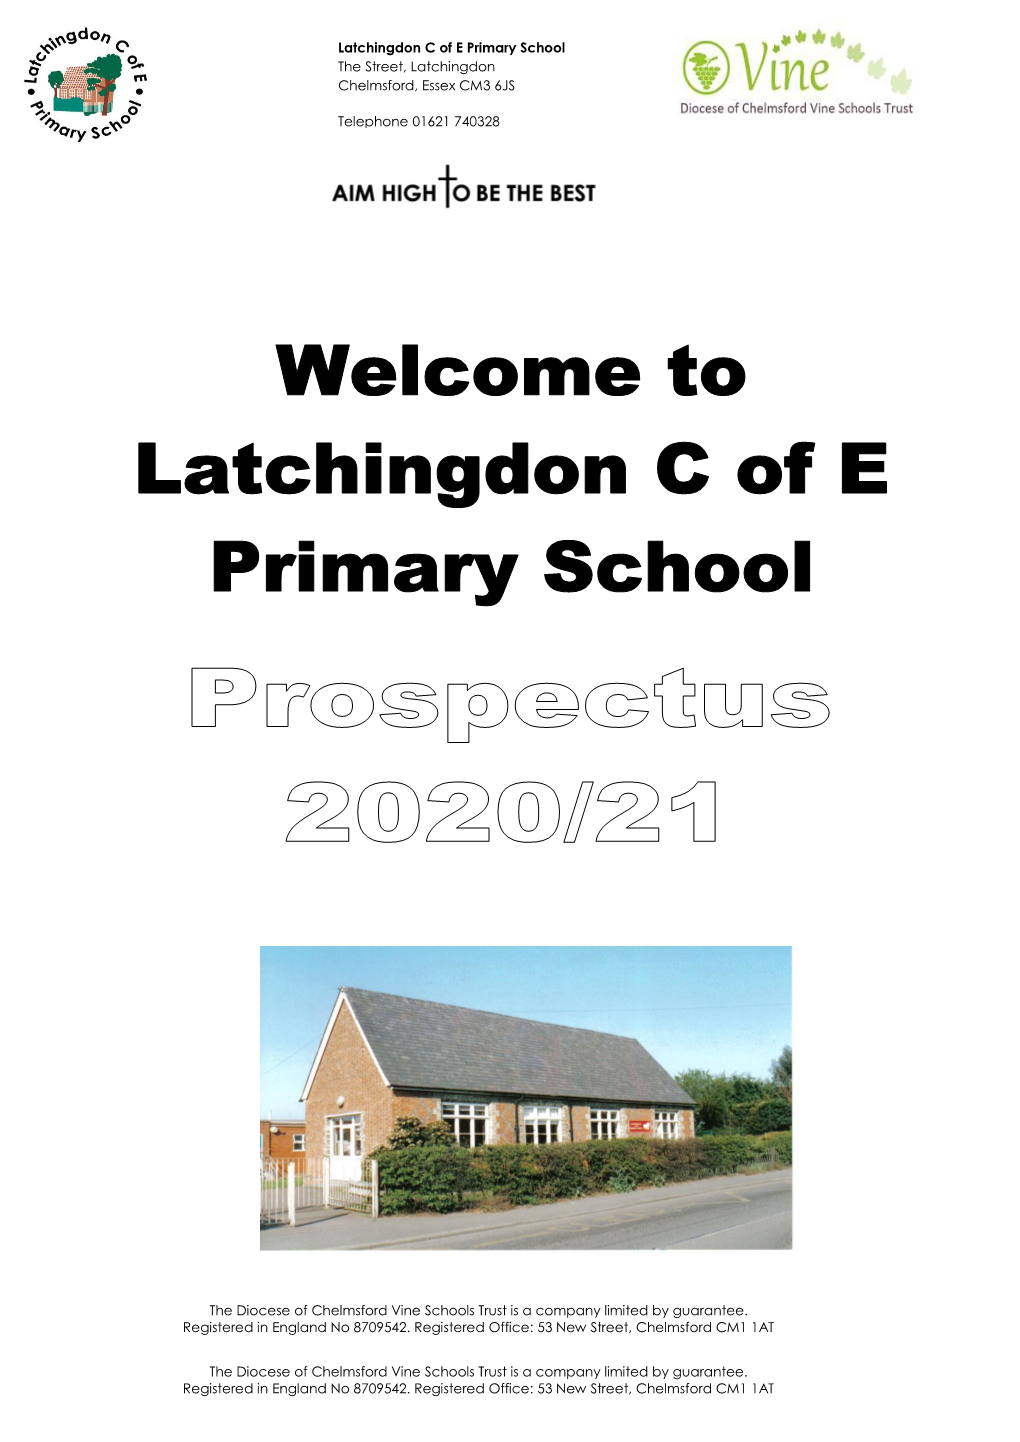 Latchingdon C of E Primary School the Street, Latchingdon Chelmsford, Essex CM3 6JS